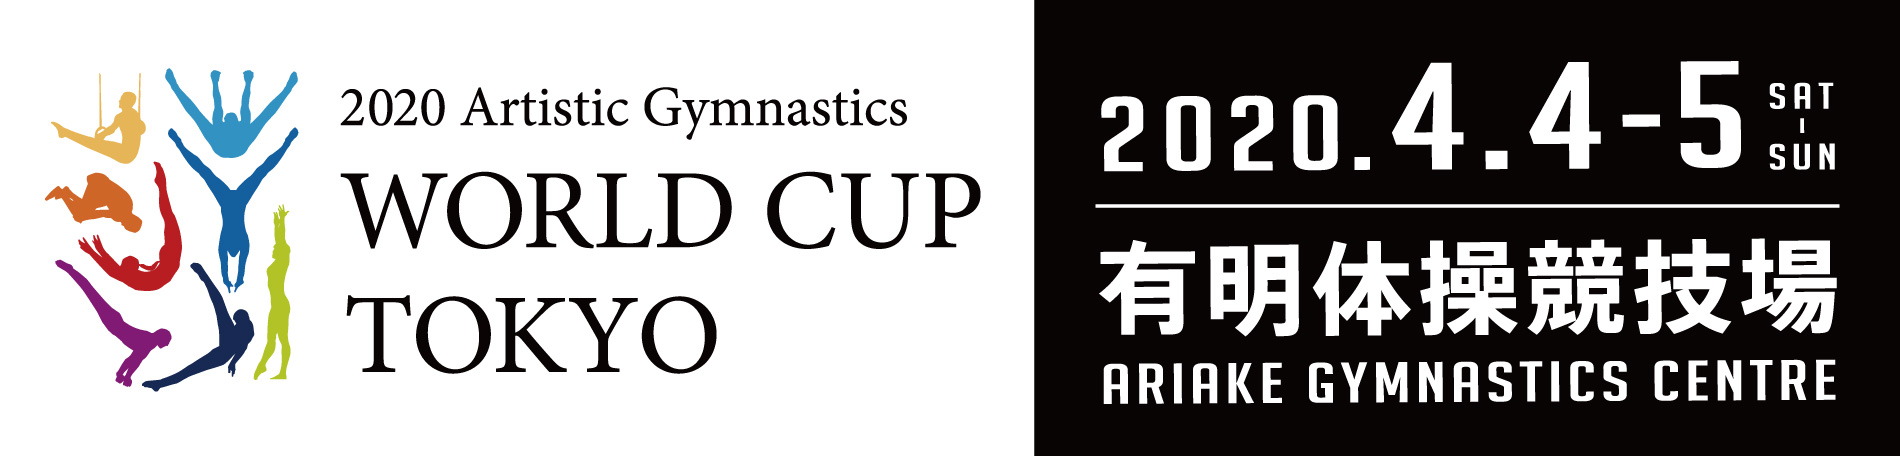 2020 Artistic Gymnastics World Cup Tokyo